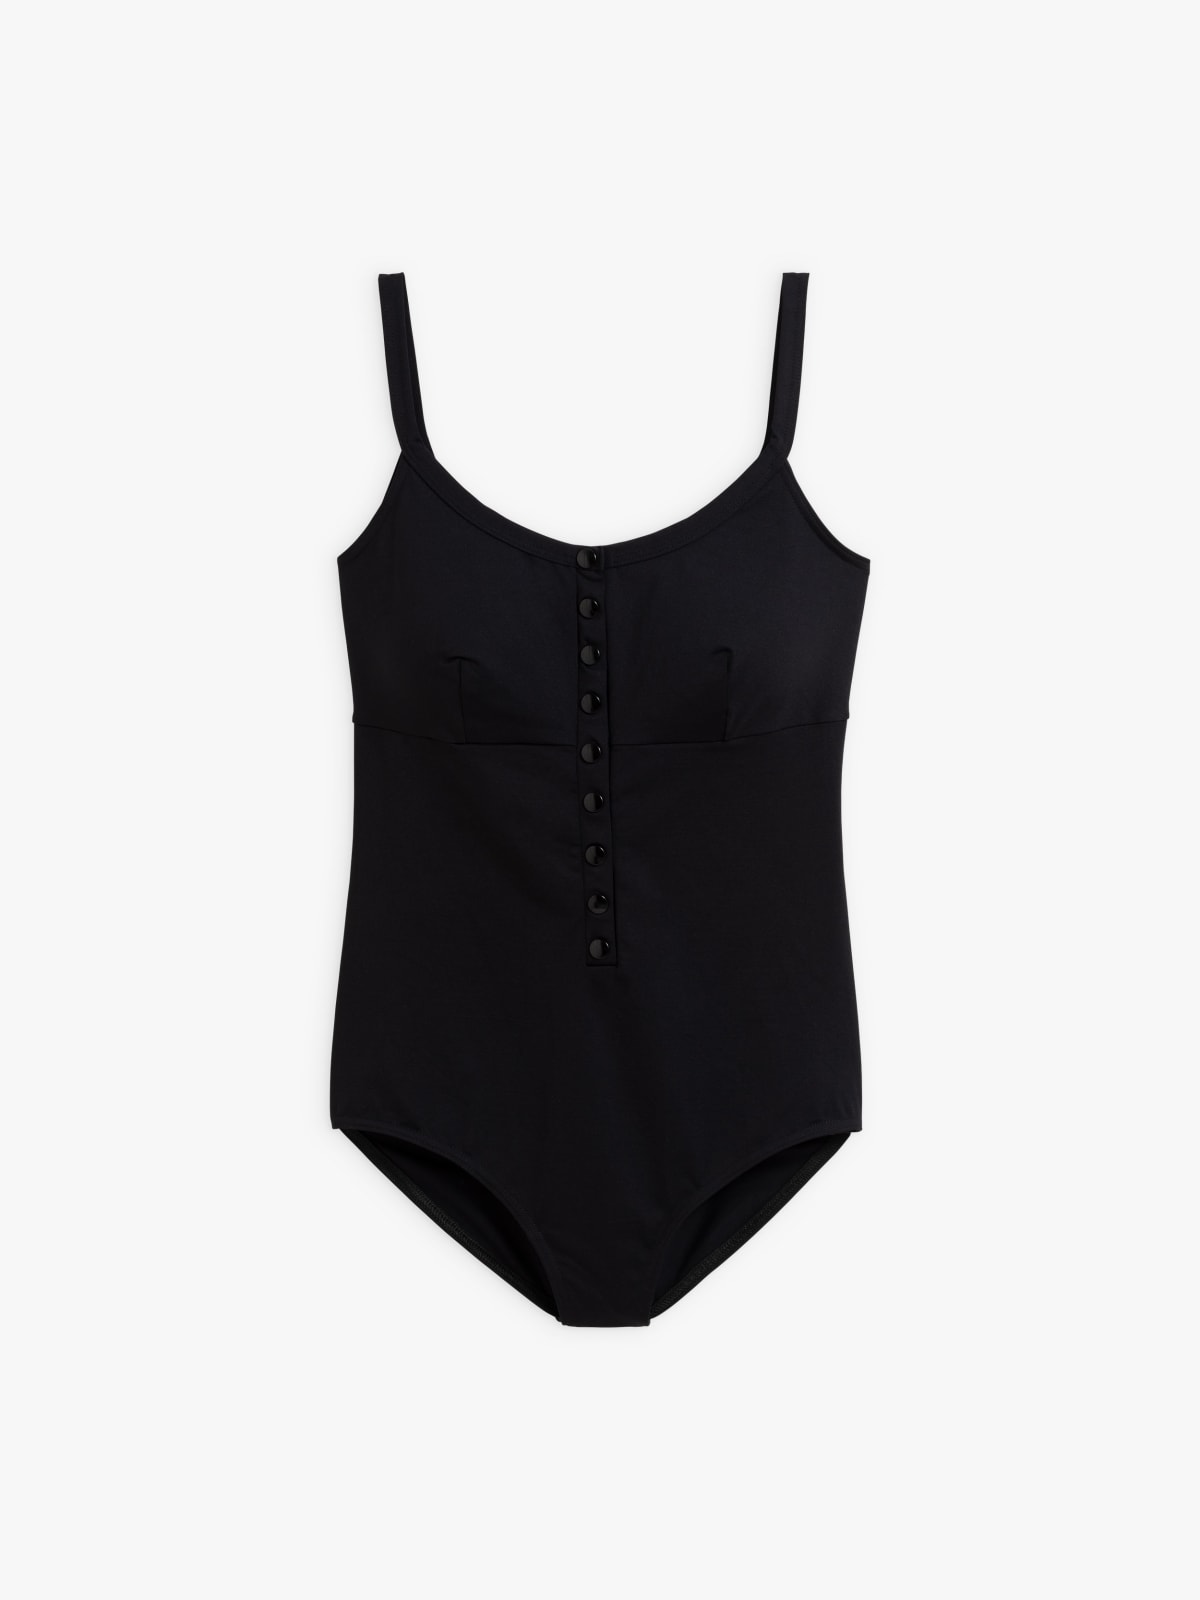 black one-piece snap swimsuit